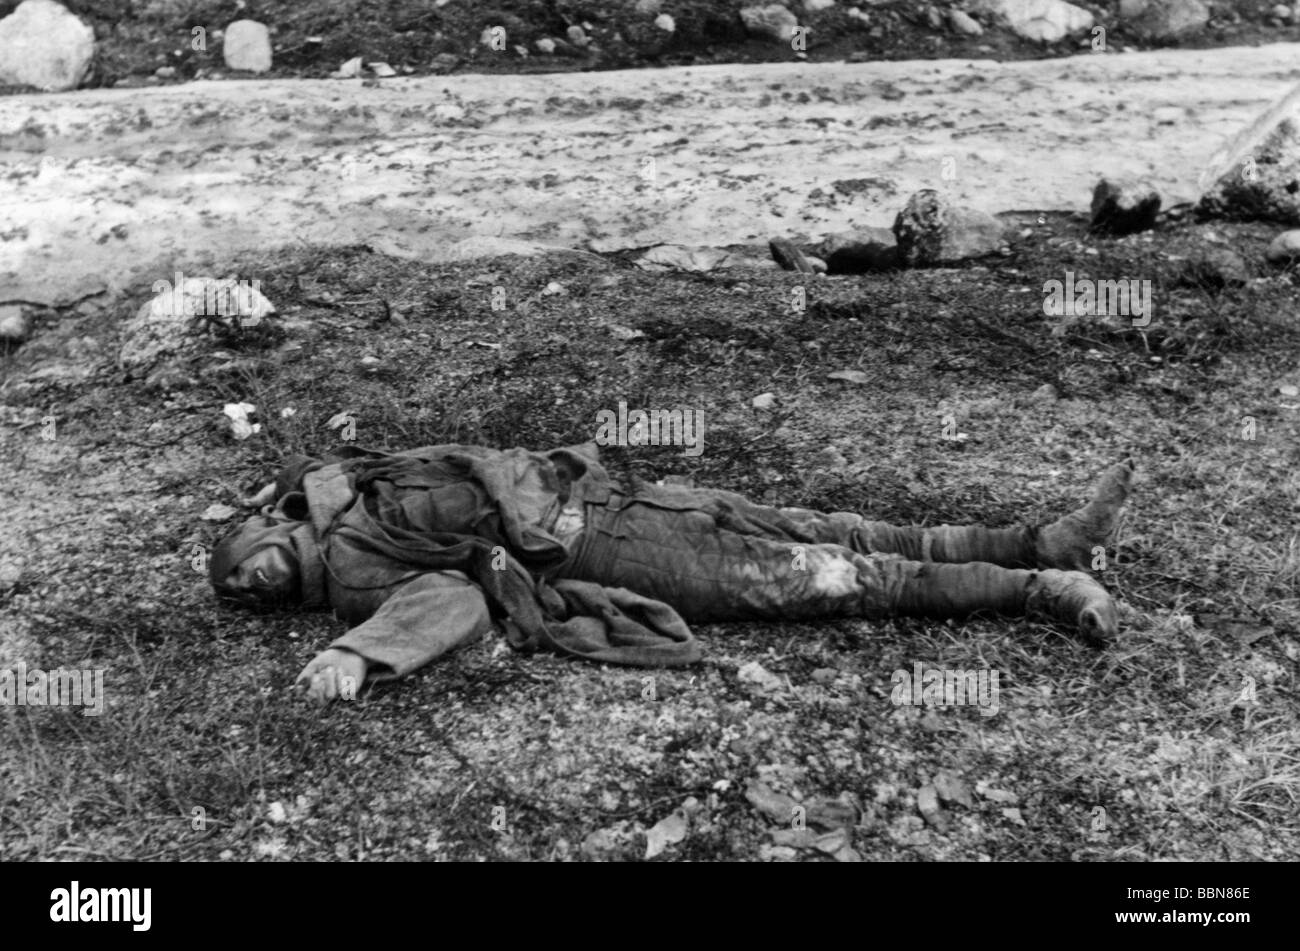 events, Second World War / WWII, Russia, fallen soldiers / dead bodies, fallen Soviet soldier, circa 1942, Stock Photo